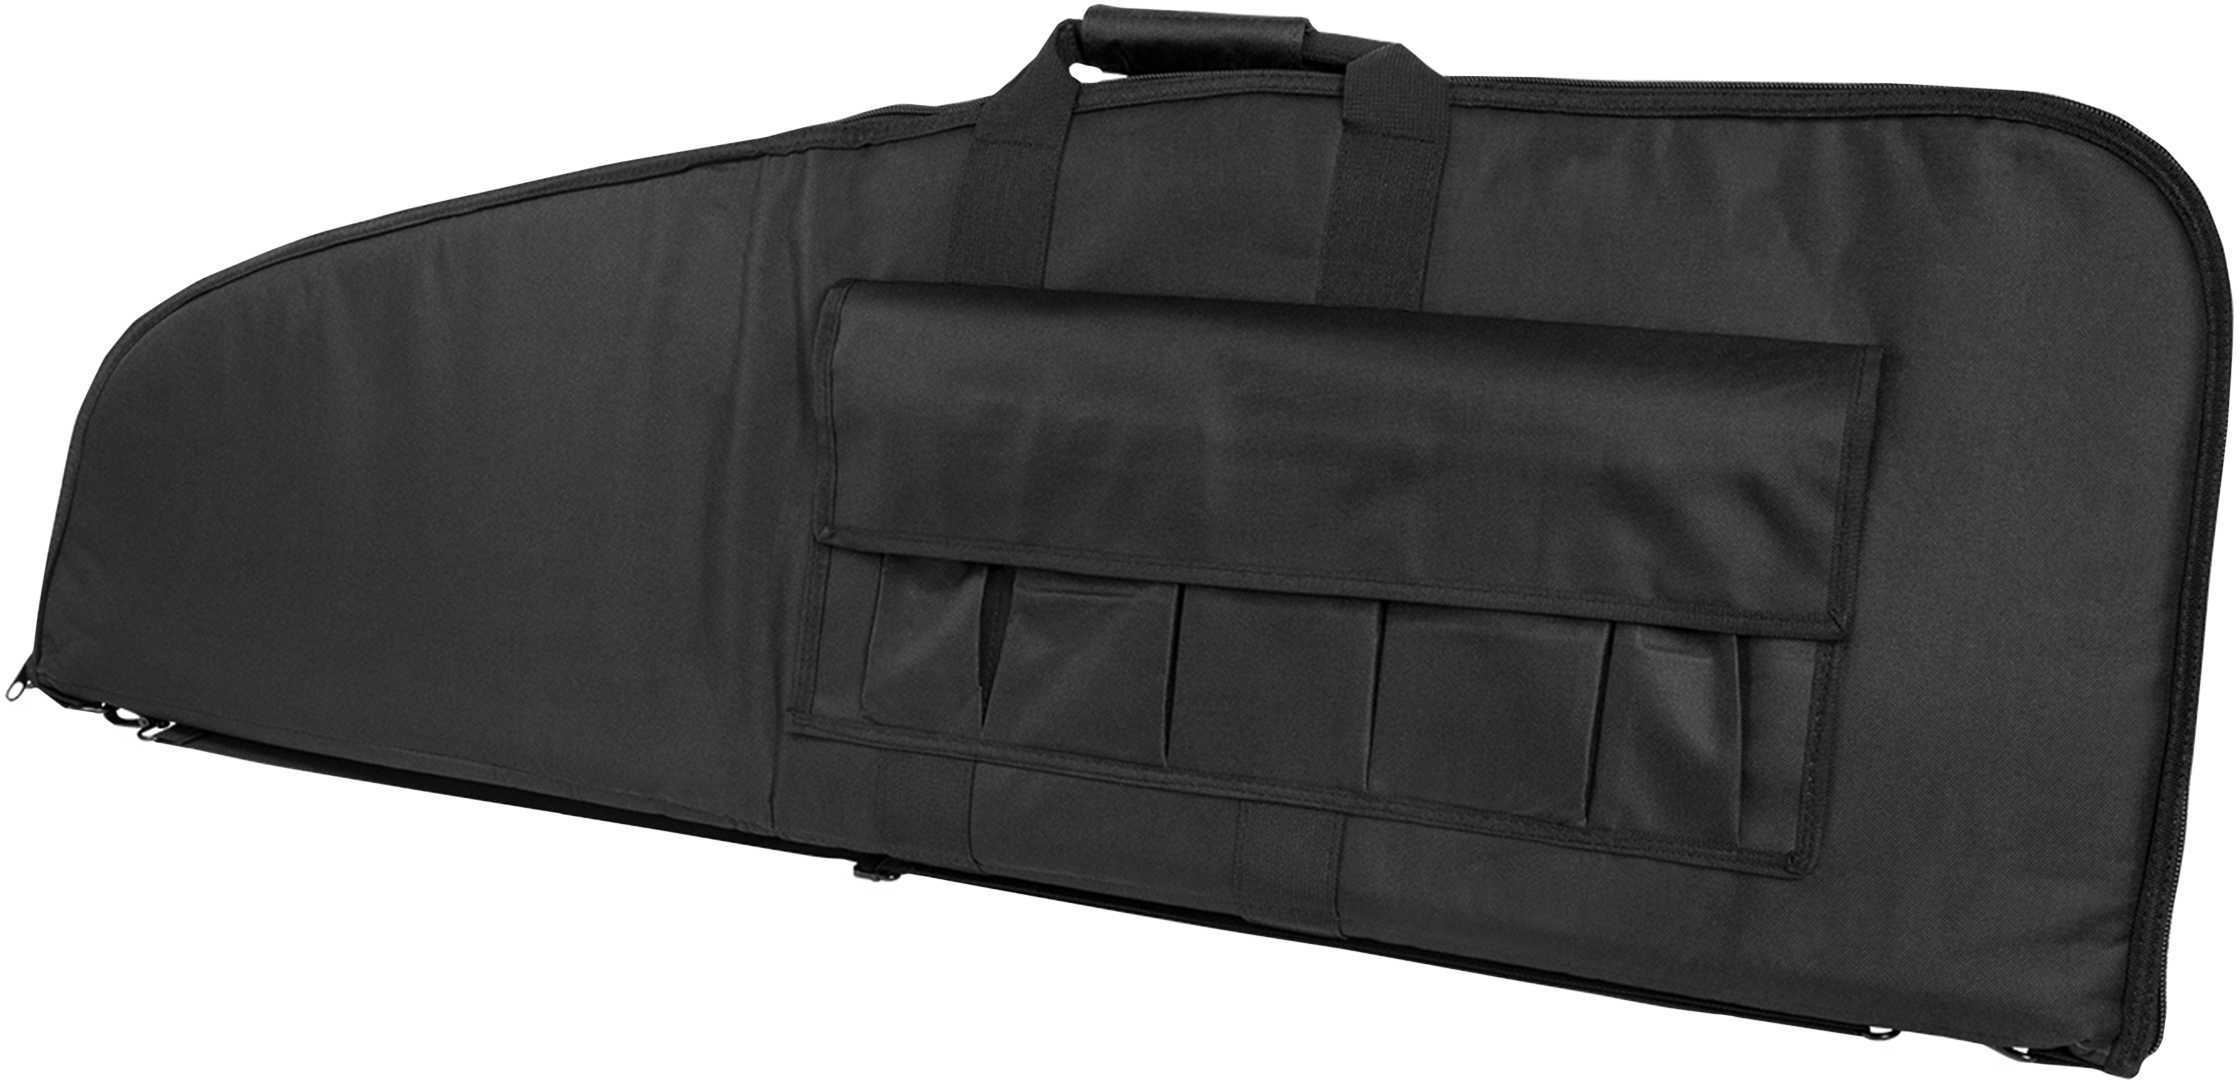 NcStar Scoped Gun Case, Black (45"L x 16"H) CVS2907-45